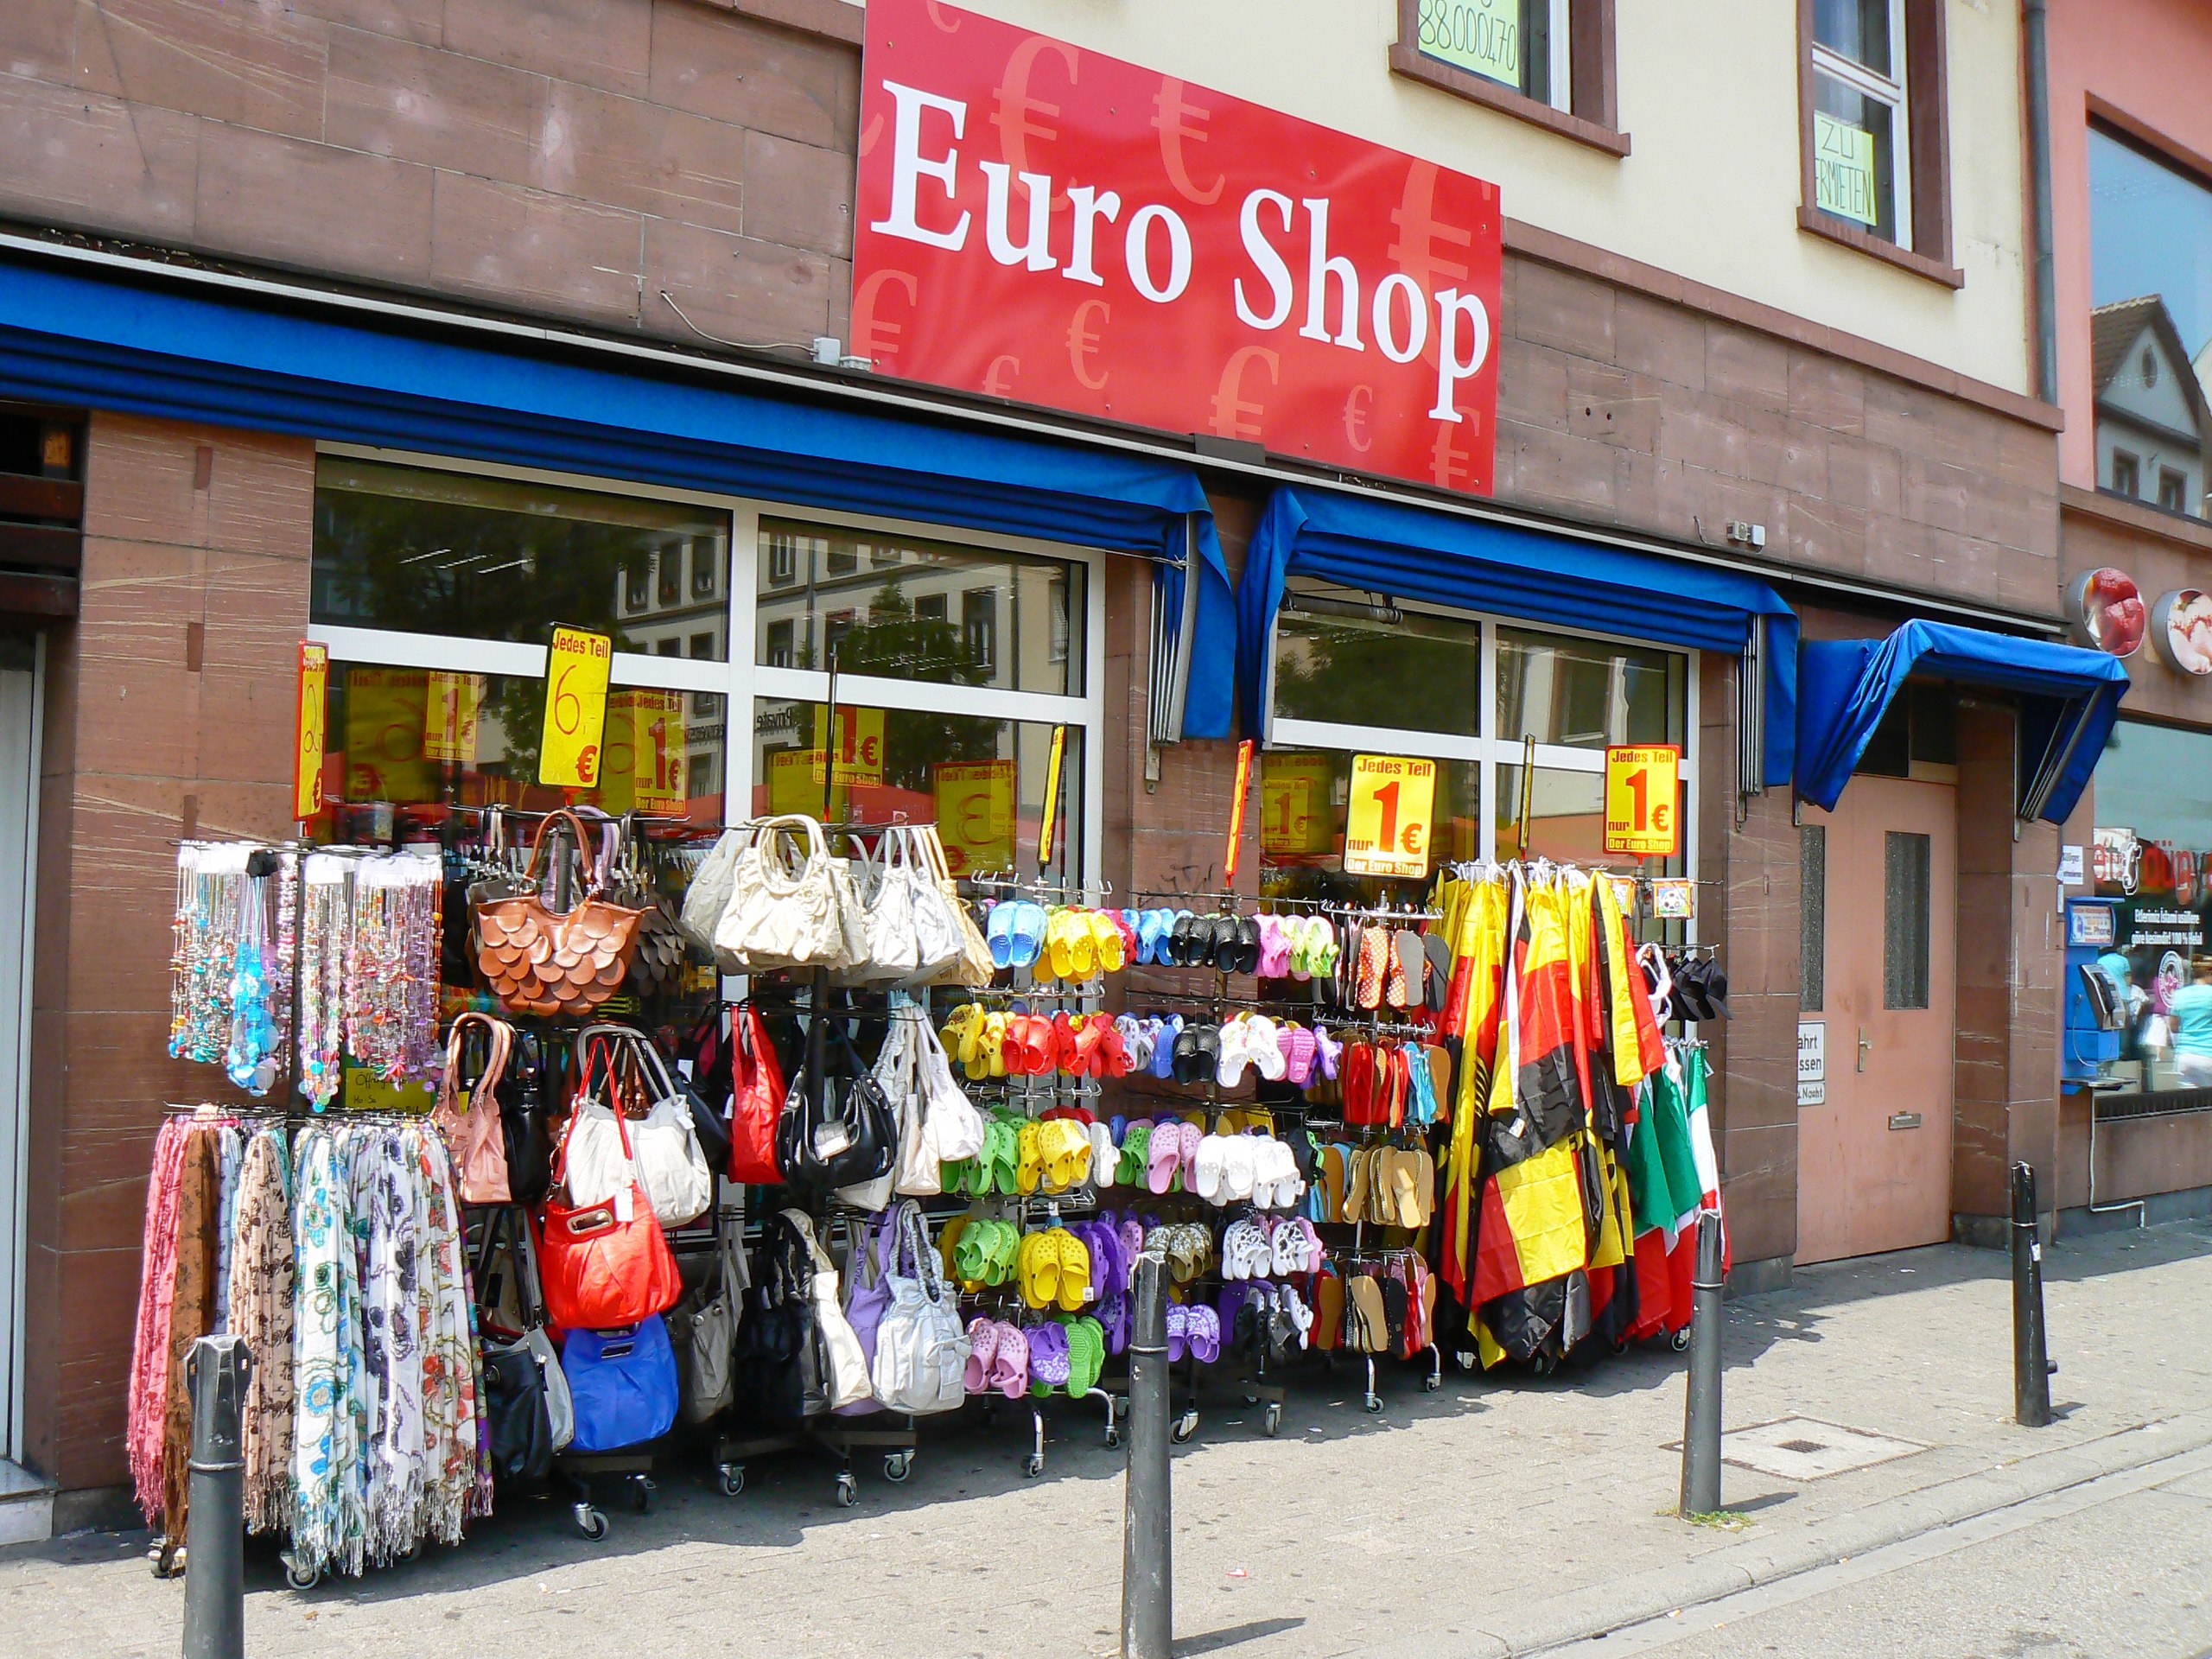 Miljard Uitsluiten Meenemen File:Euro Shop Mannheim.jpg - Wikimedia Commons